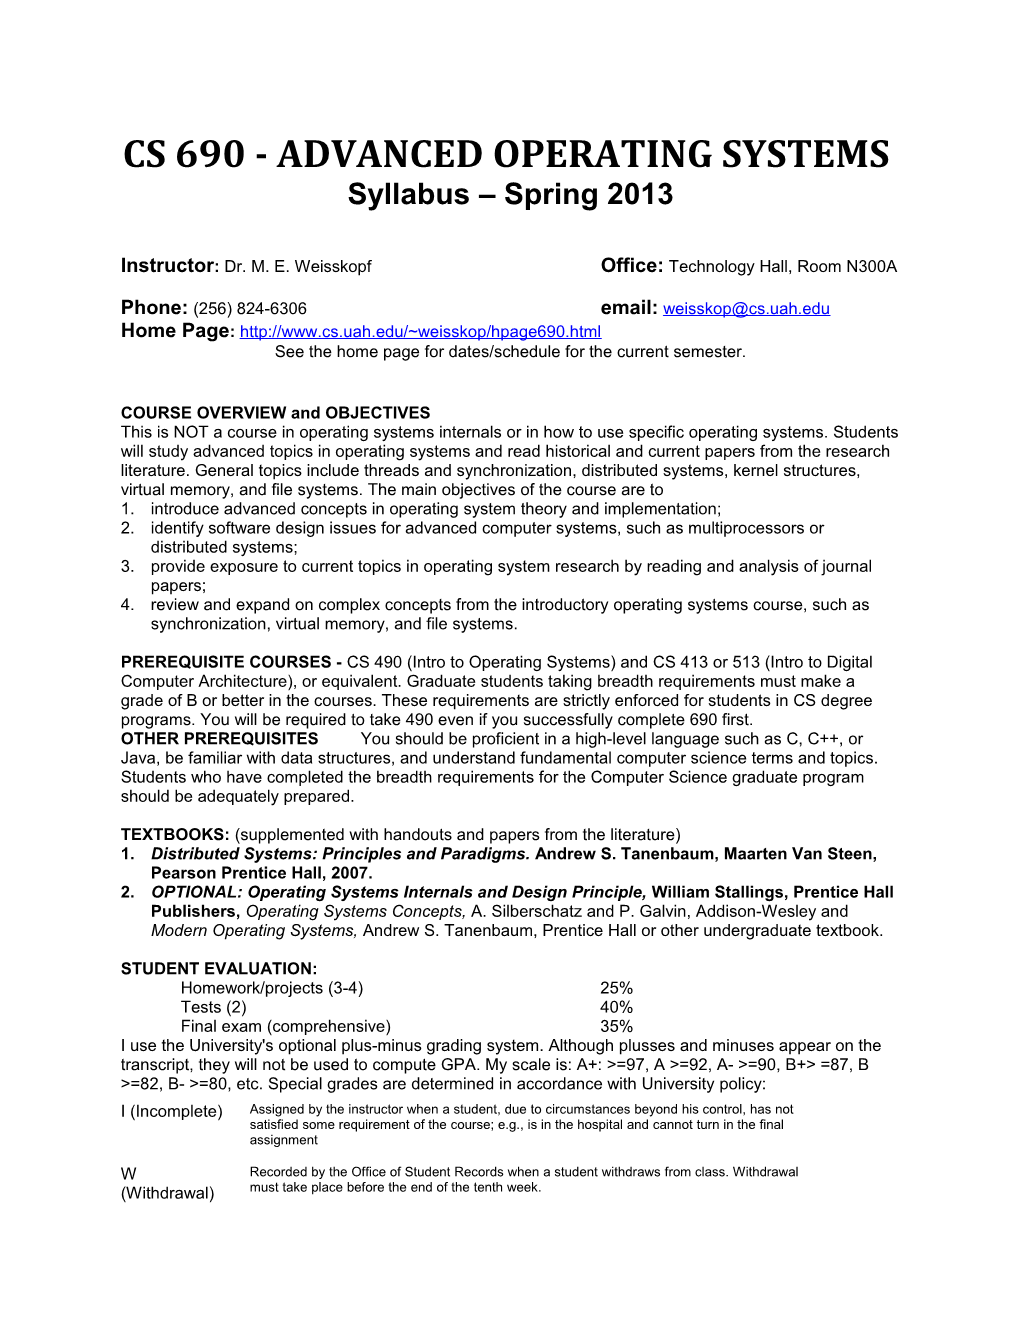 Cs 690 (Operating Systems) Syllabus